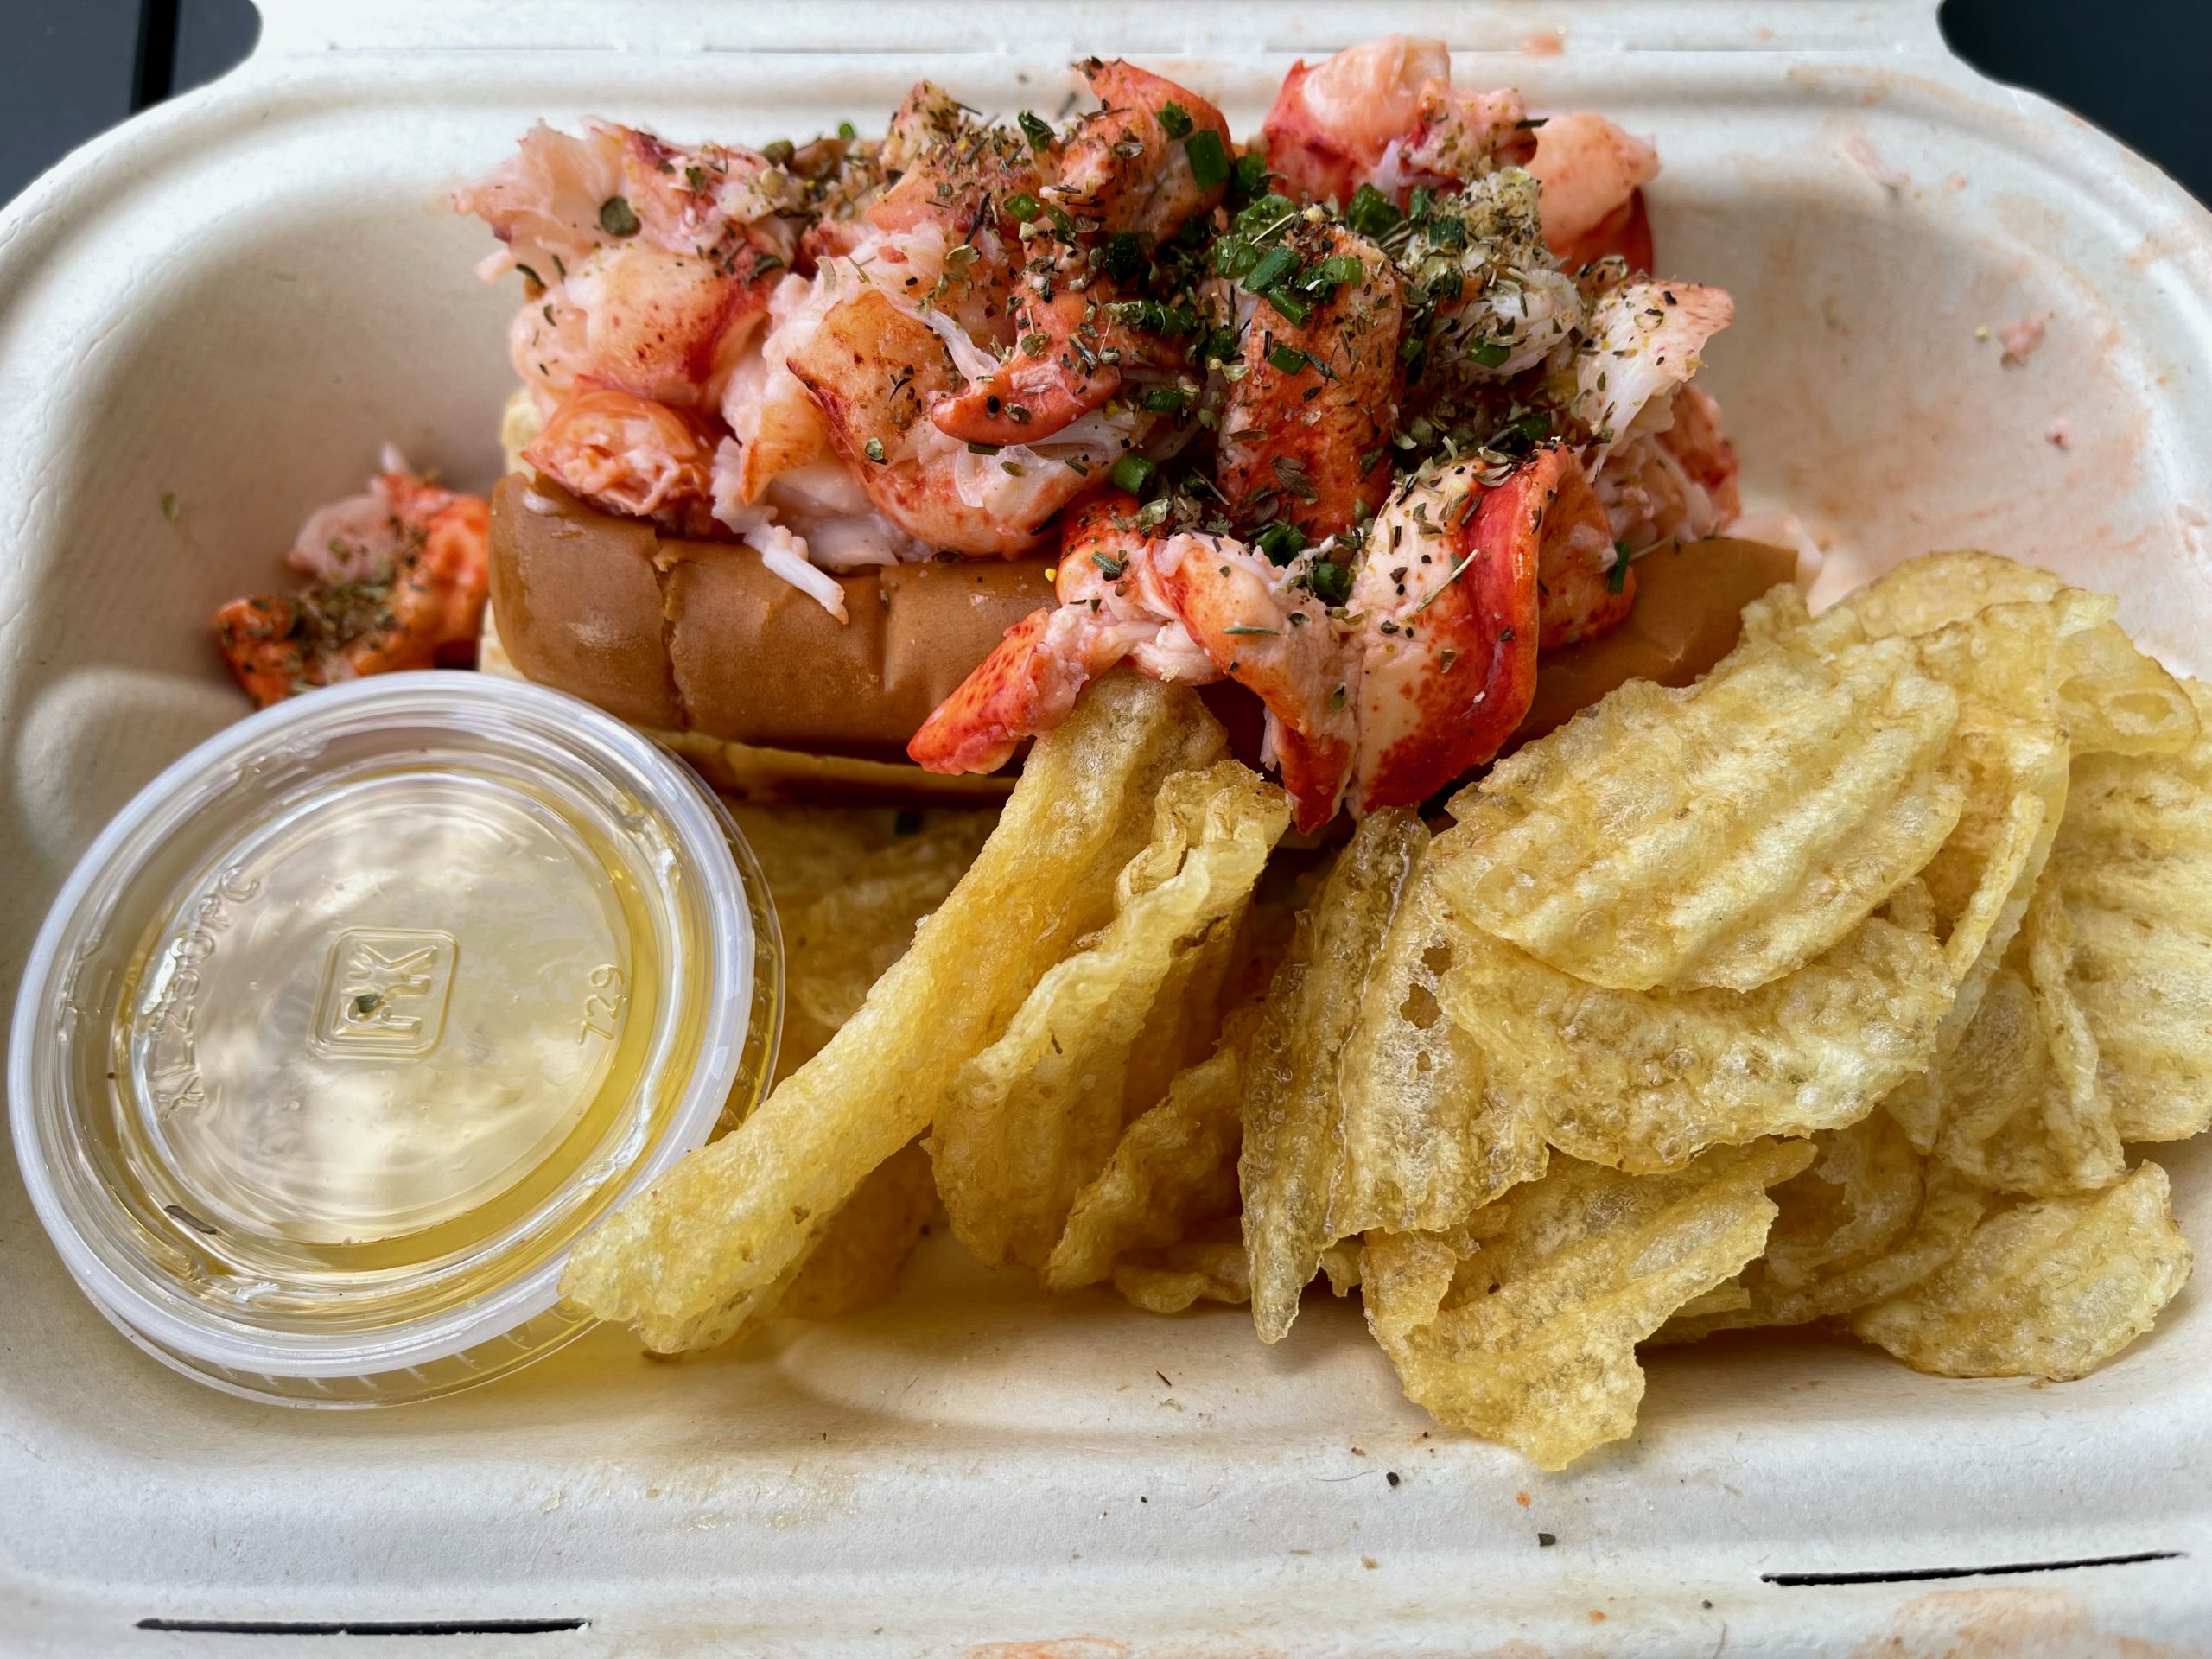 Freshie’s Lobster Co. – Salt Lake City, Utah